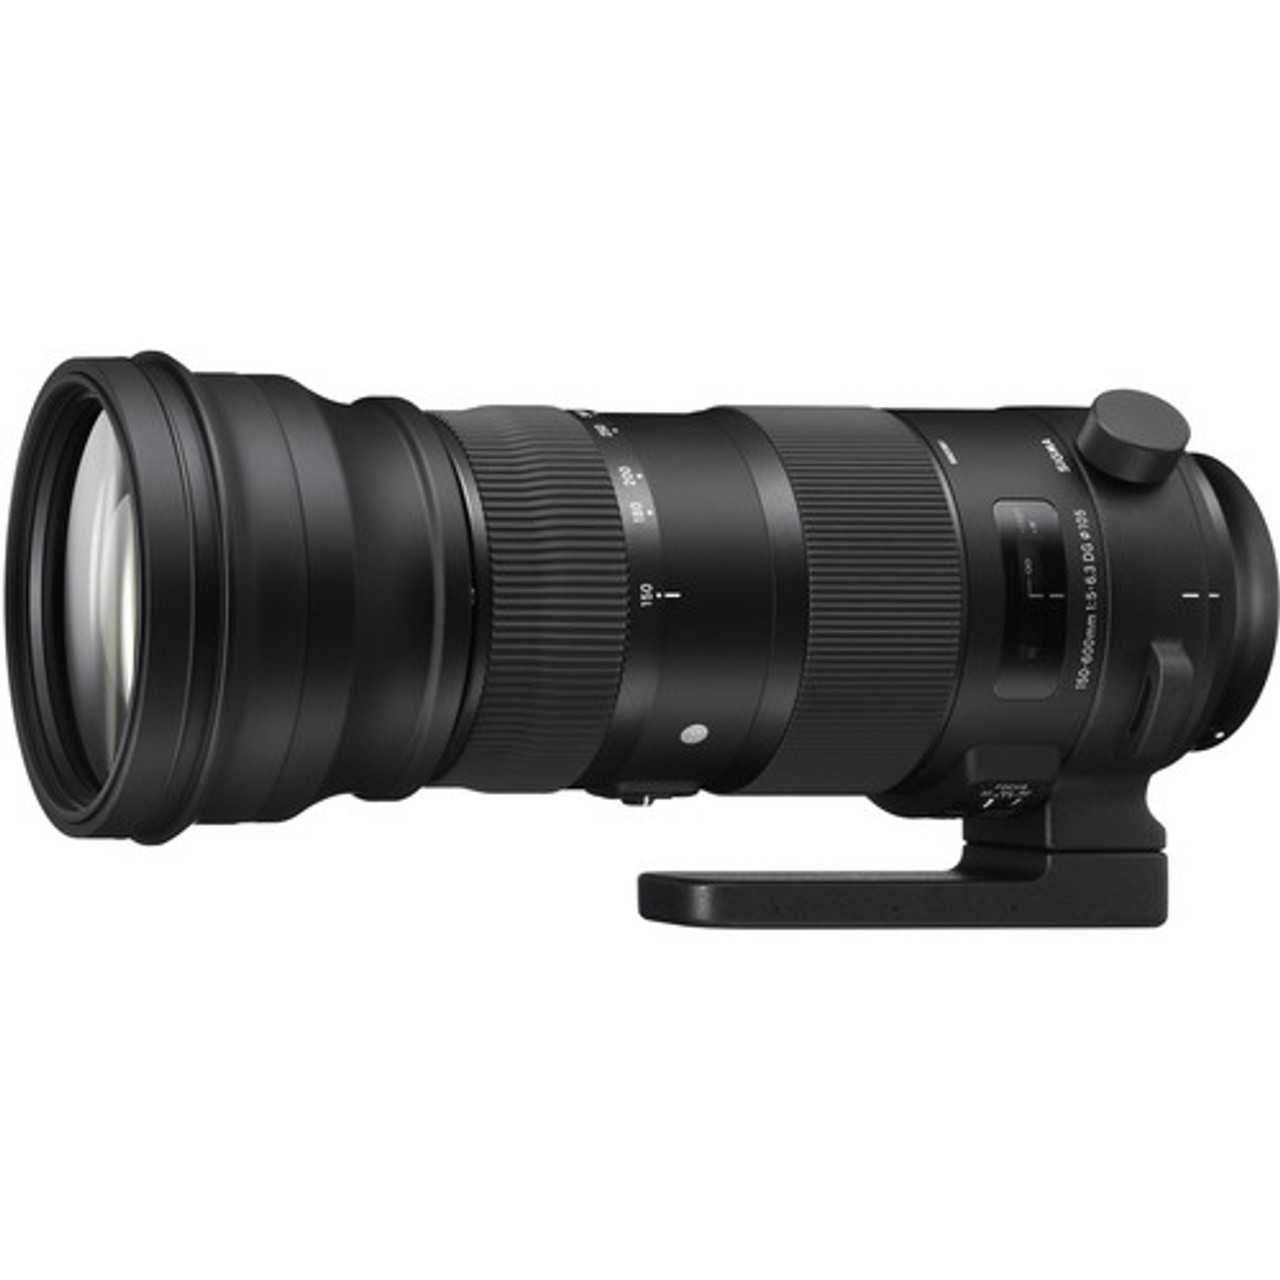 150-600mm f/5-6.3 DG OS HSM Nikon